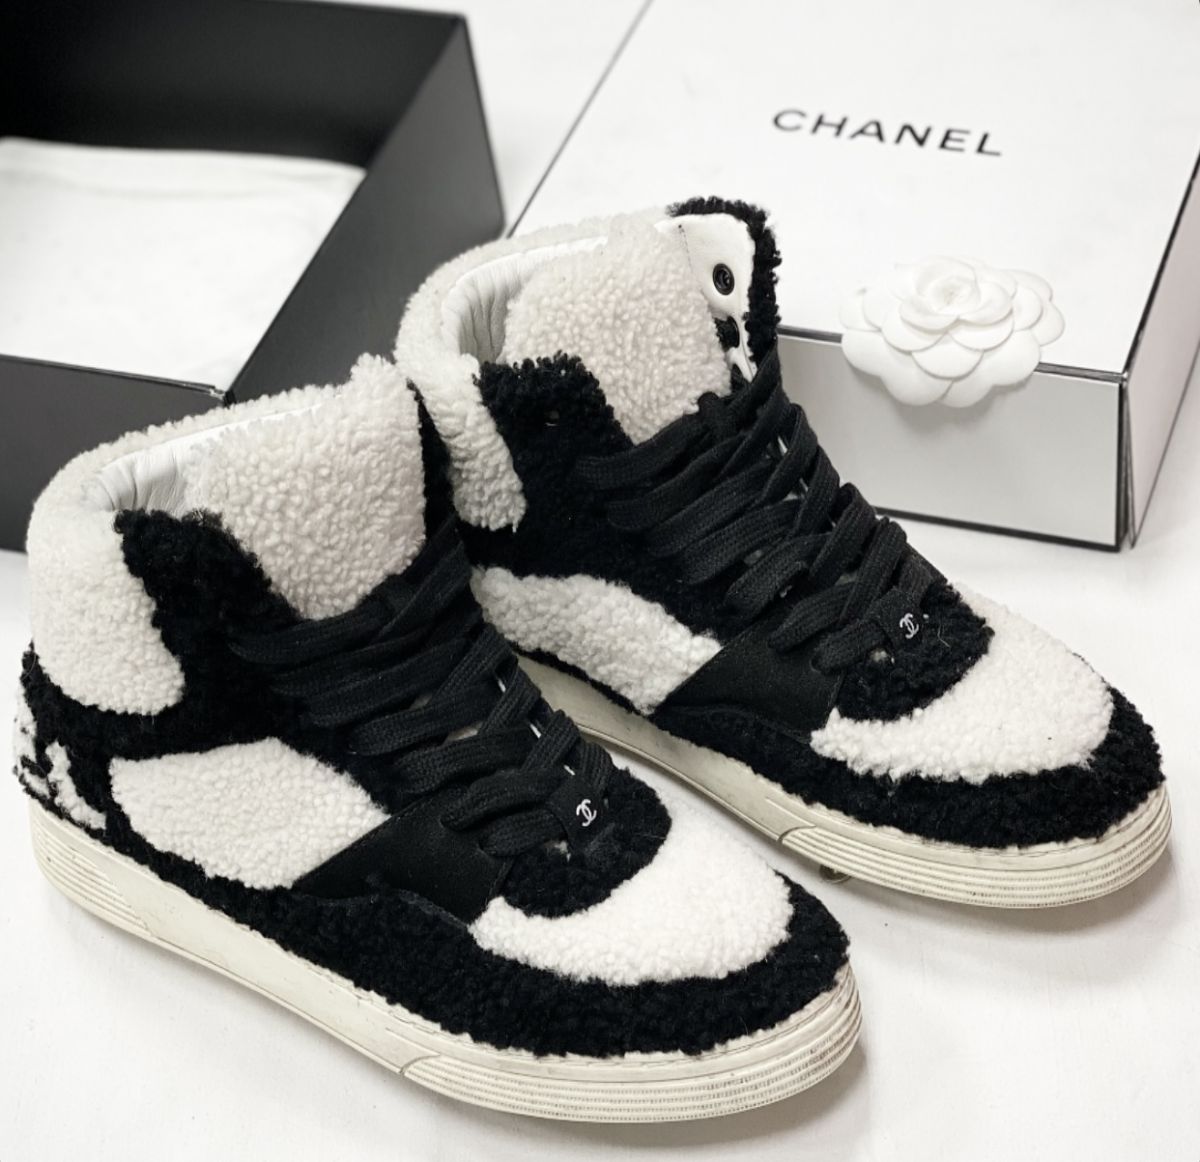 Ботинки Chanel размер 39 цена 76 925 руб 